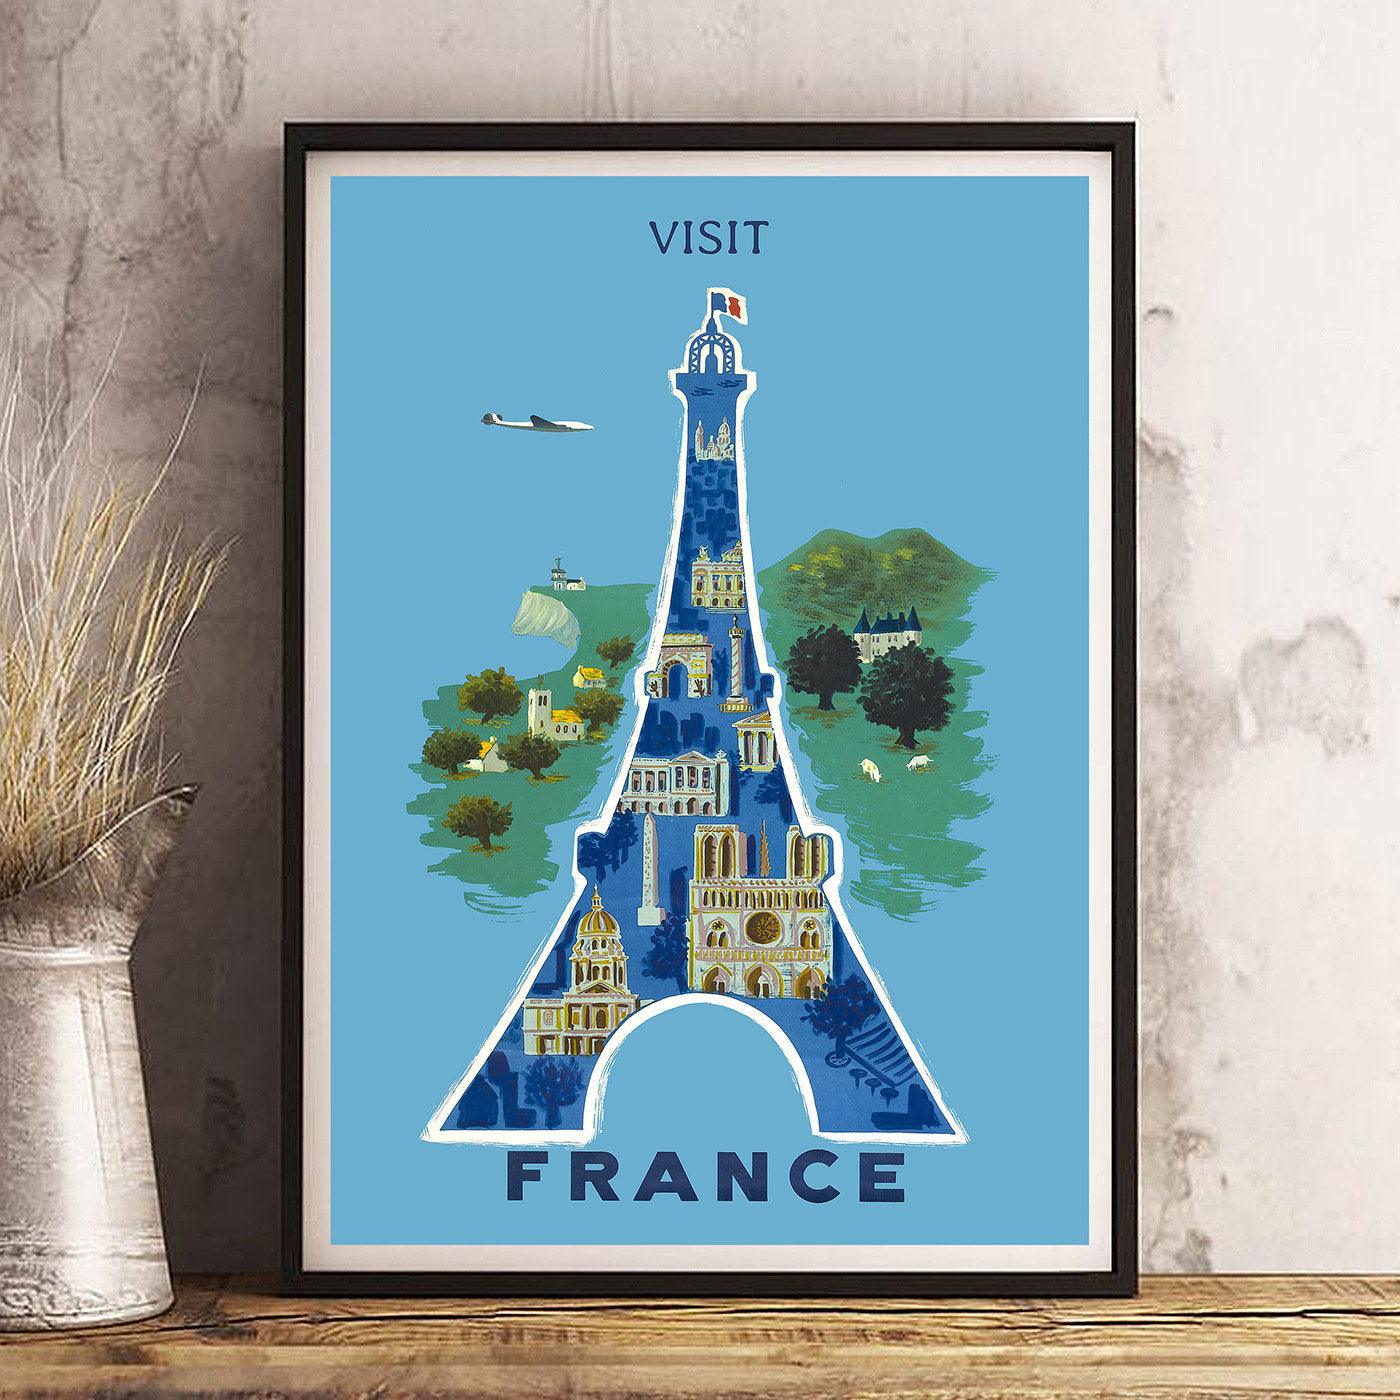 VISIT FRANCE - Vintage Travel Poster - Classic Posters